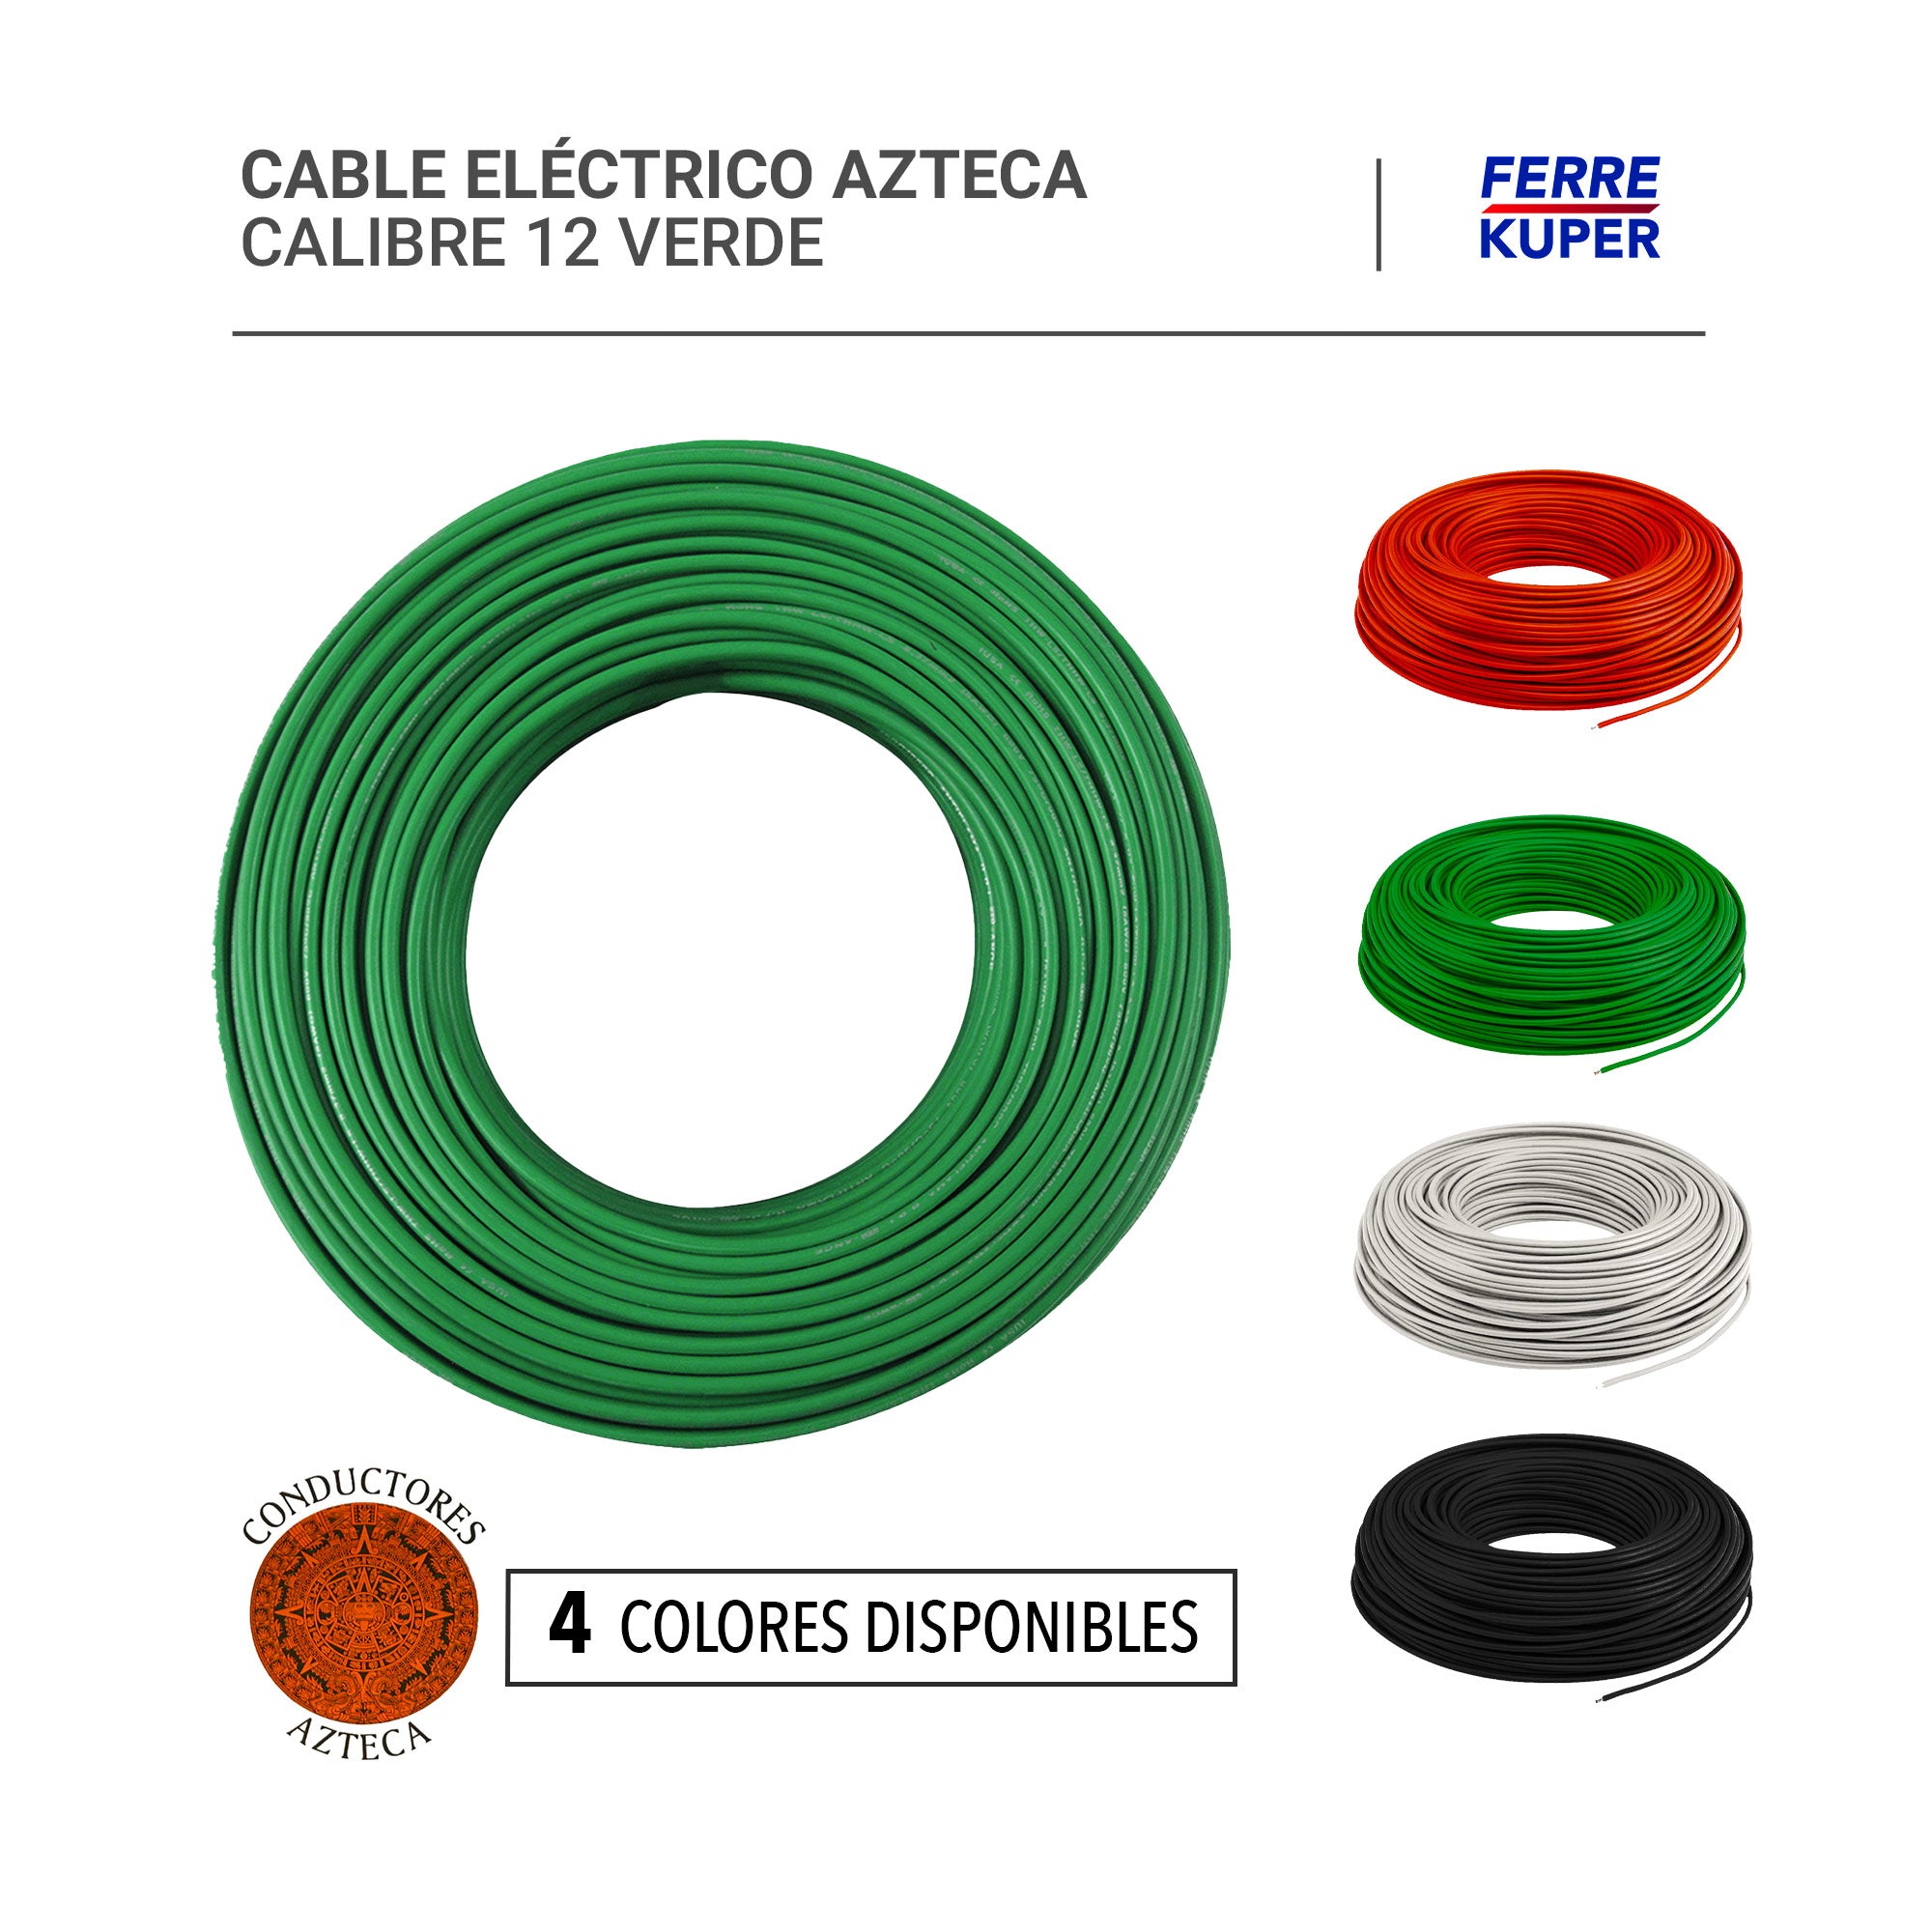 Cable Eléctrico Azteca Calibre 12 – FERREKUPER